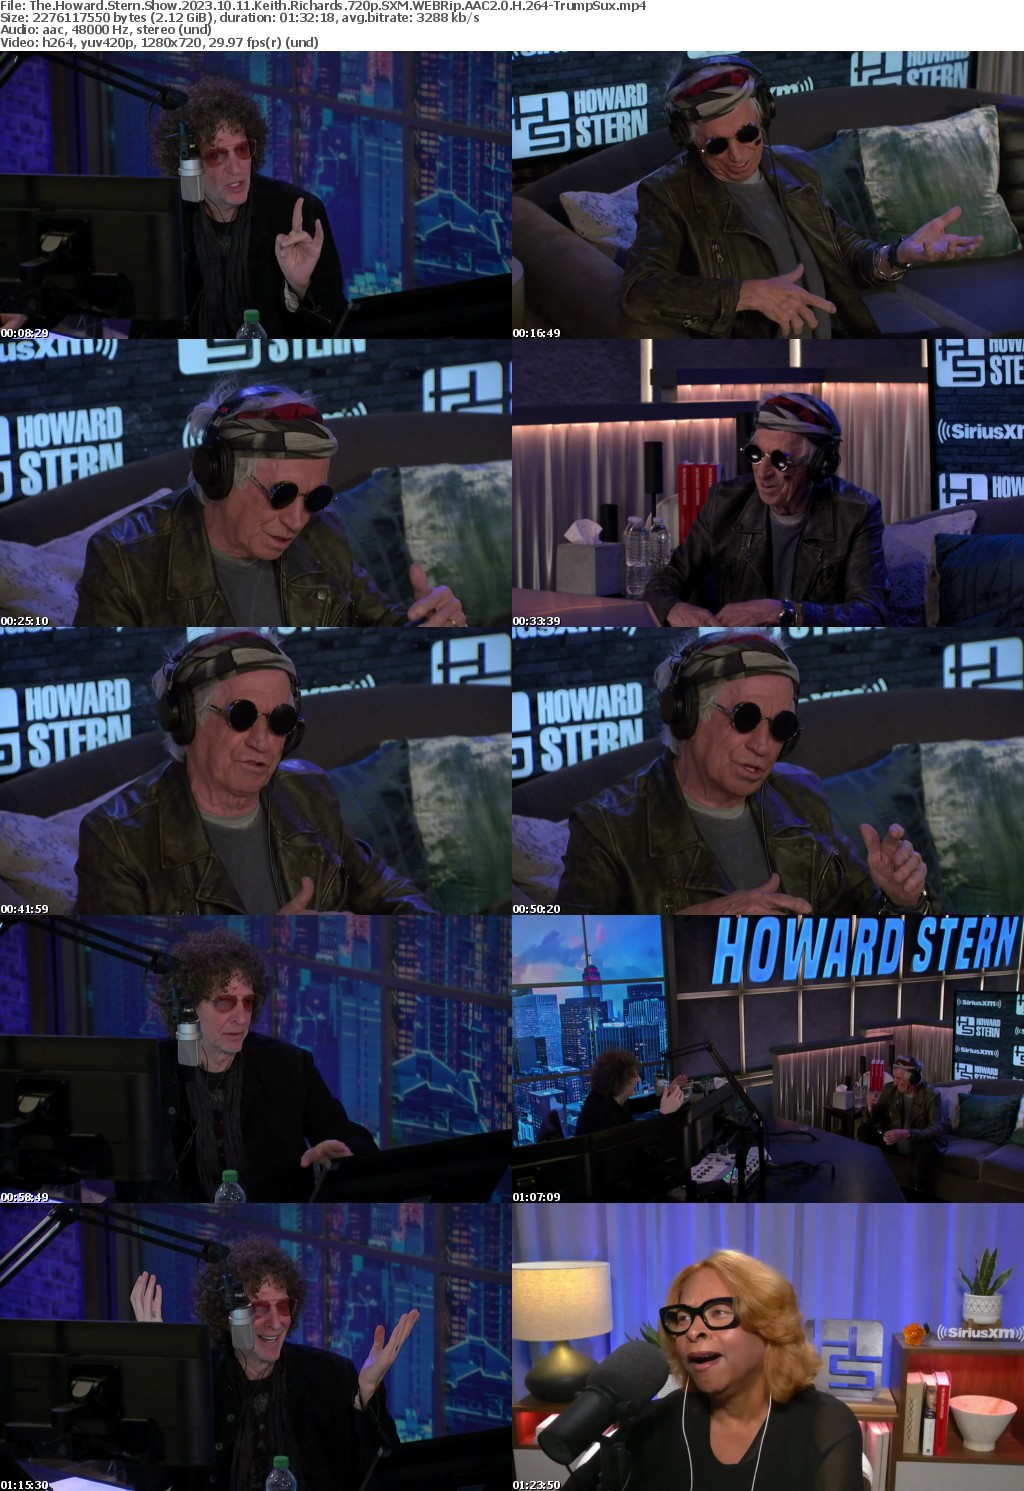 Howard Stern Show 2023 10 11 Keith Richards 720p Dbaum2